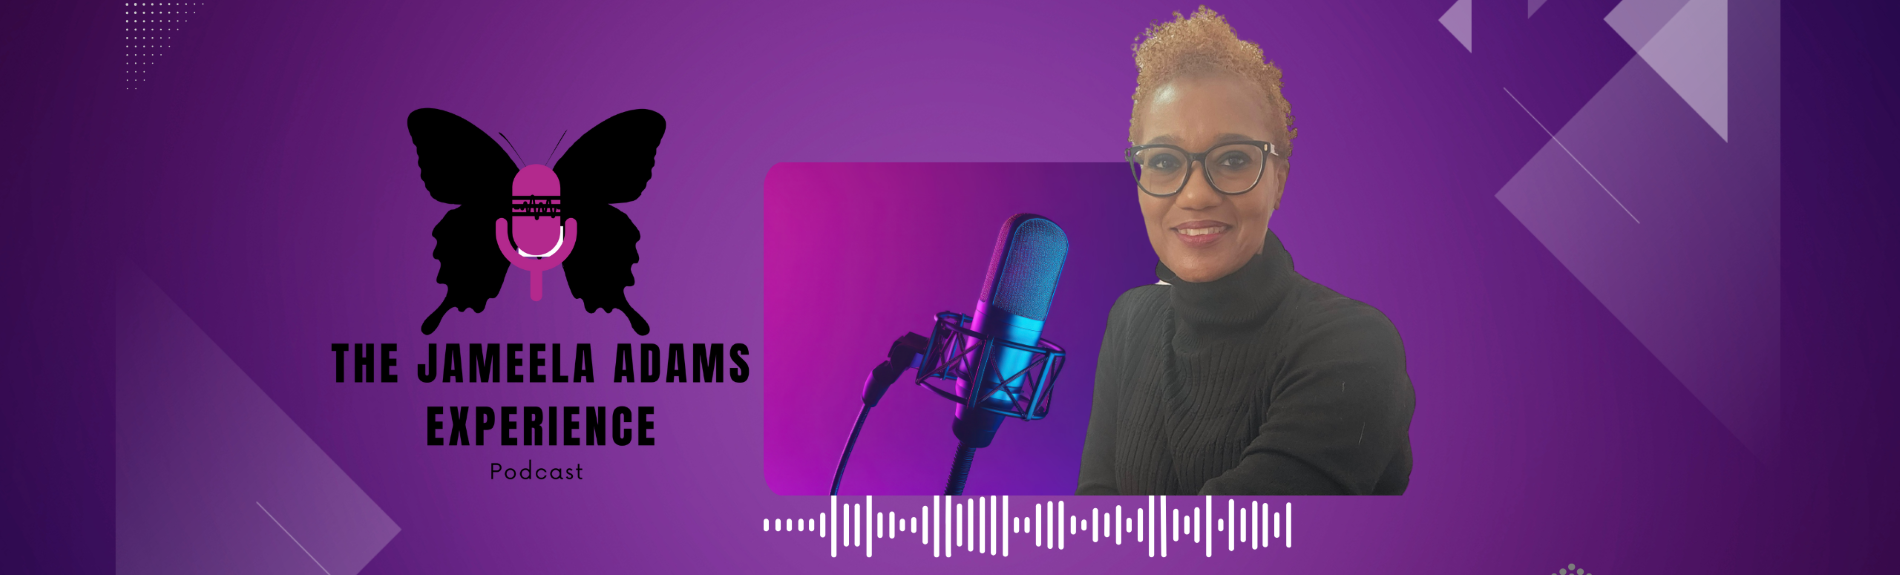 The Jameela Adams Experience Podcast